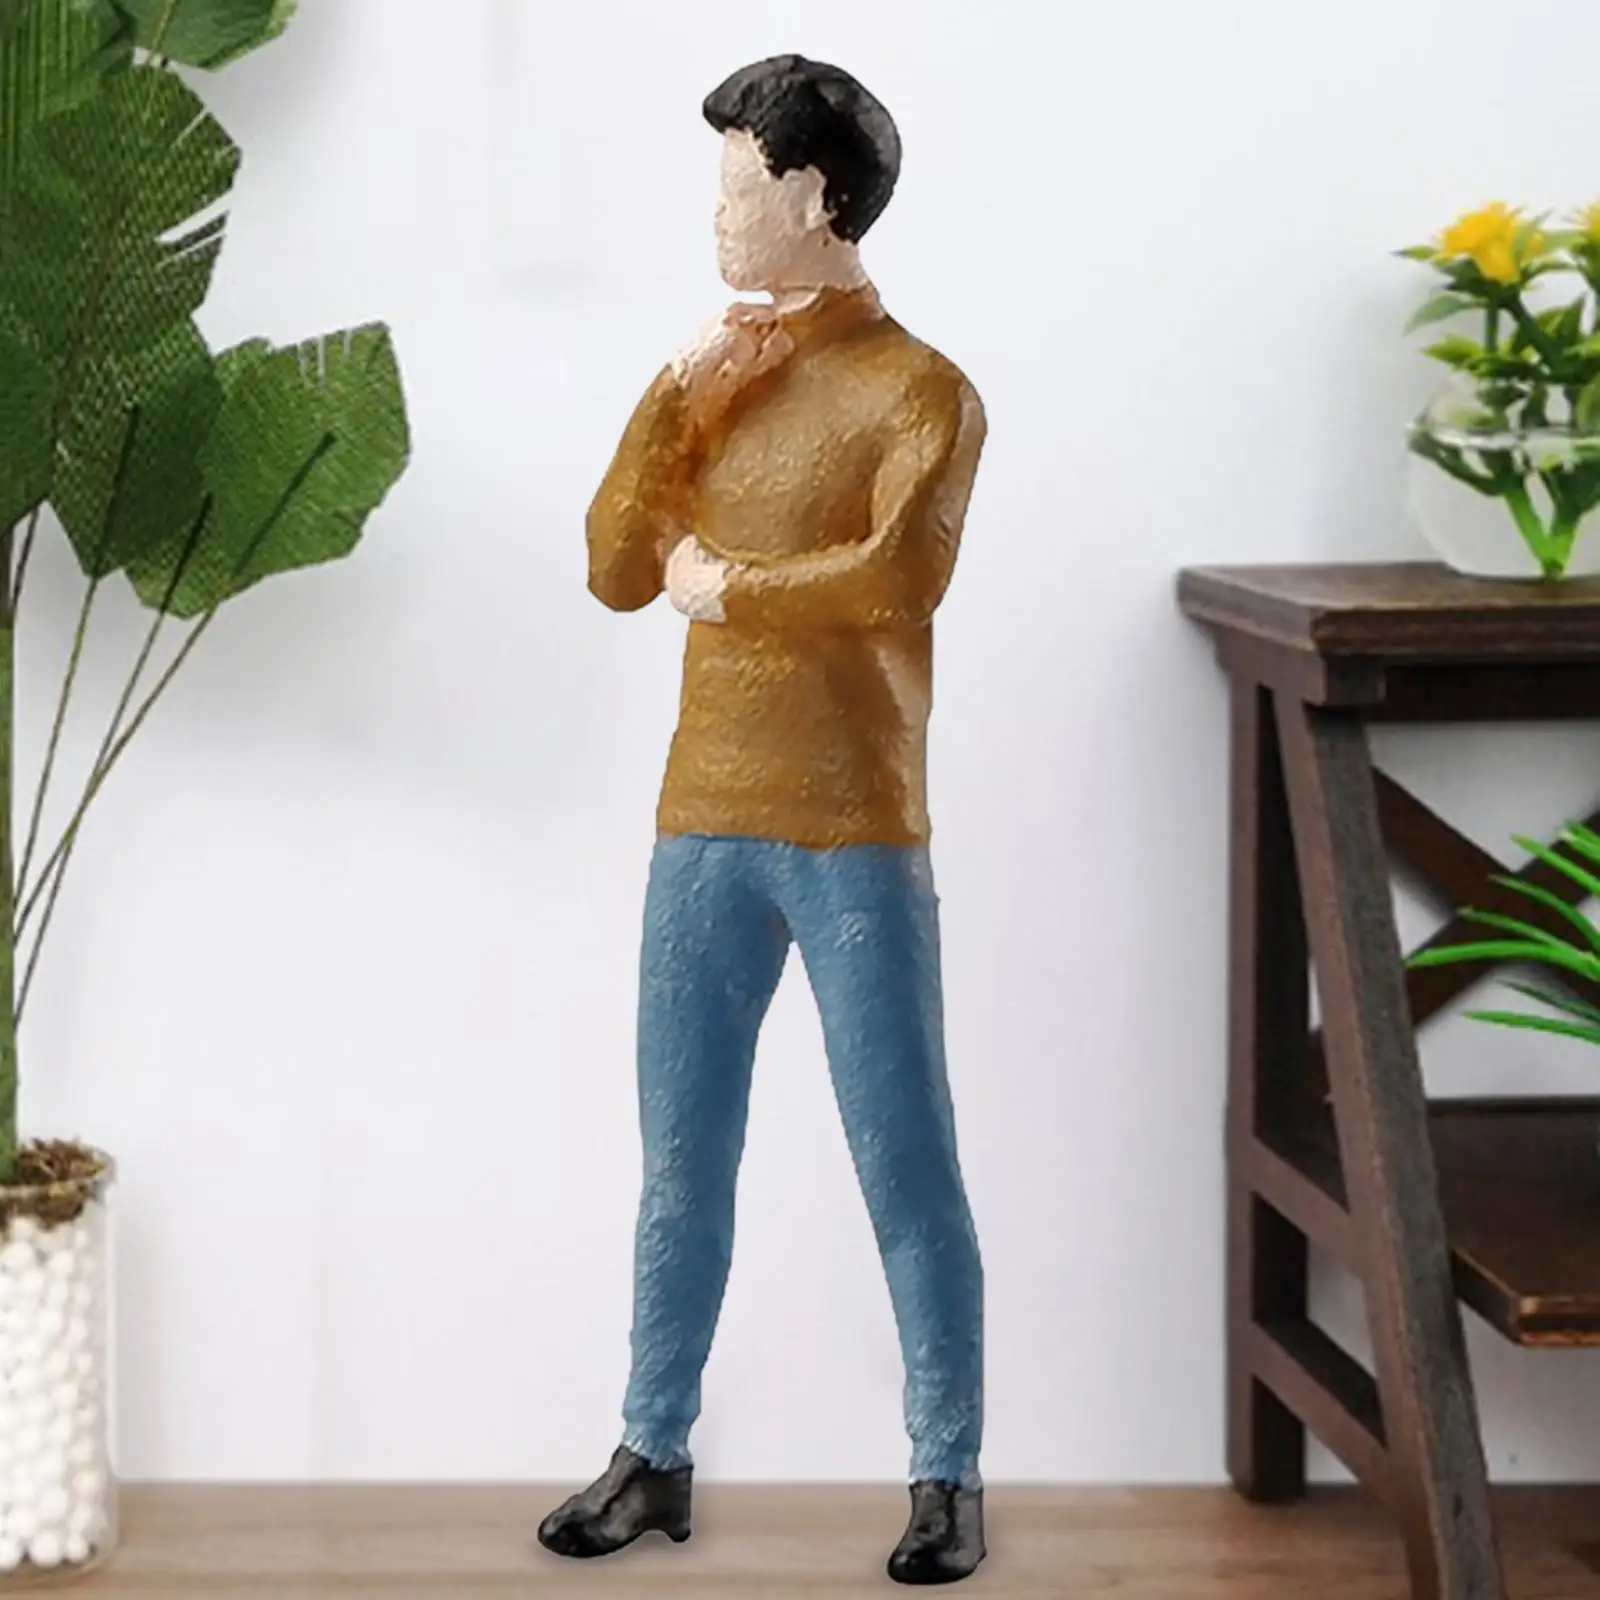 1/64 Scale Diorama Figure Miniature Model Dollhouse Decor Thinker Man for Fariy Garden